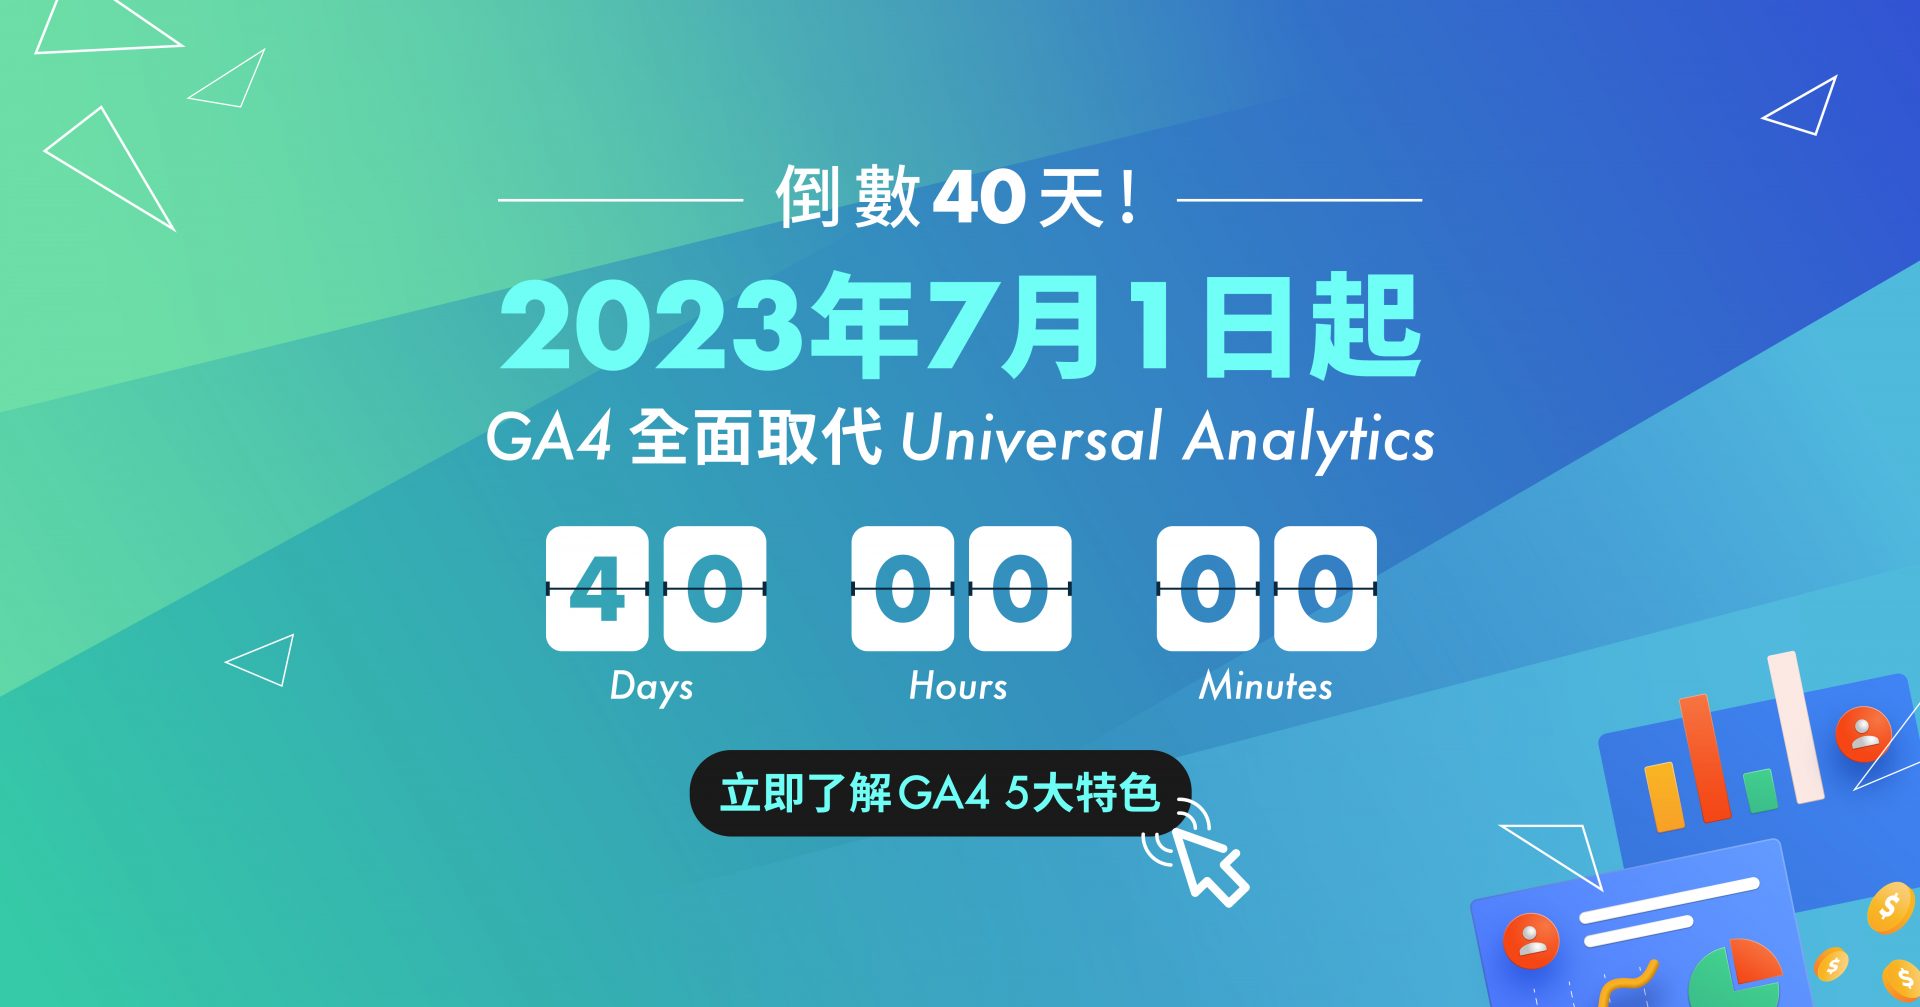 GA4 全面取代 Universal Analytics-立即了解GA4 5大特色